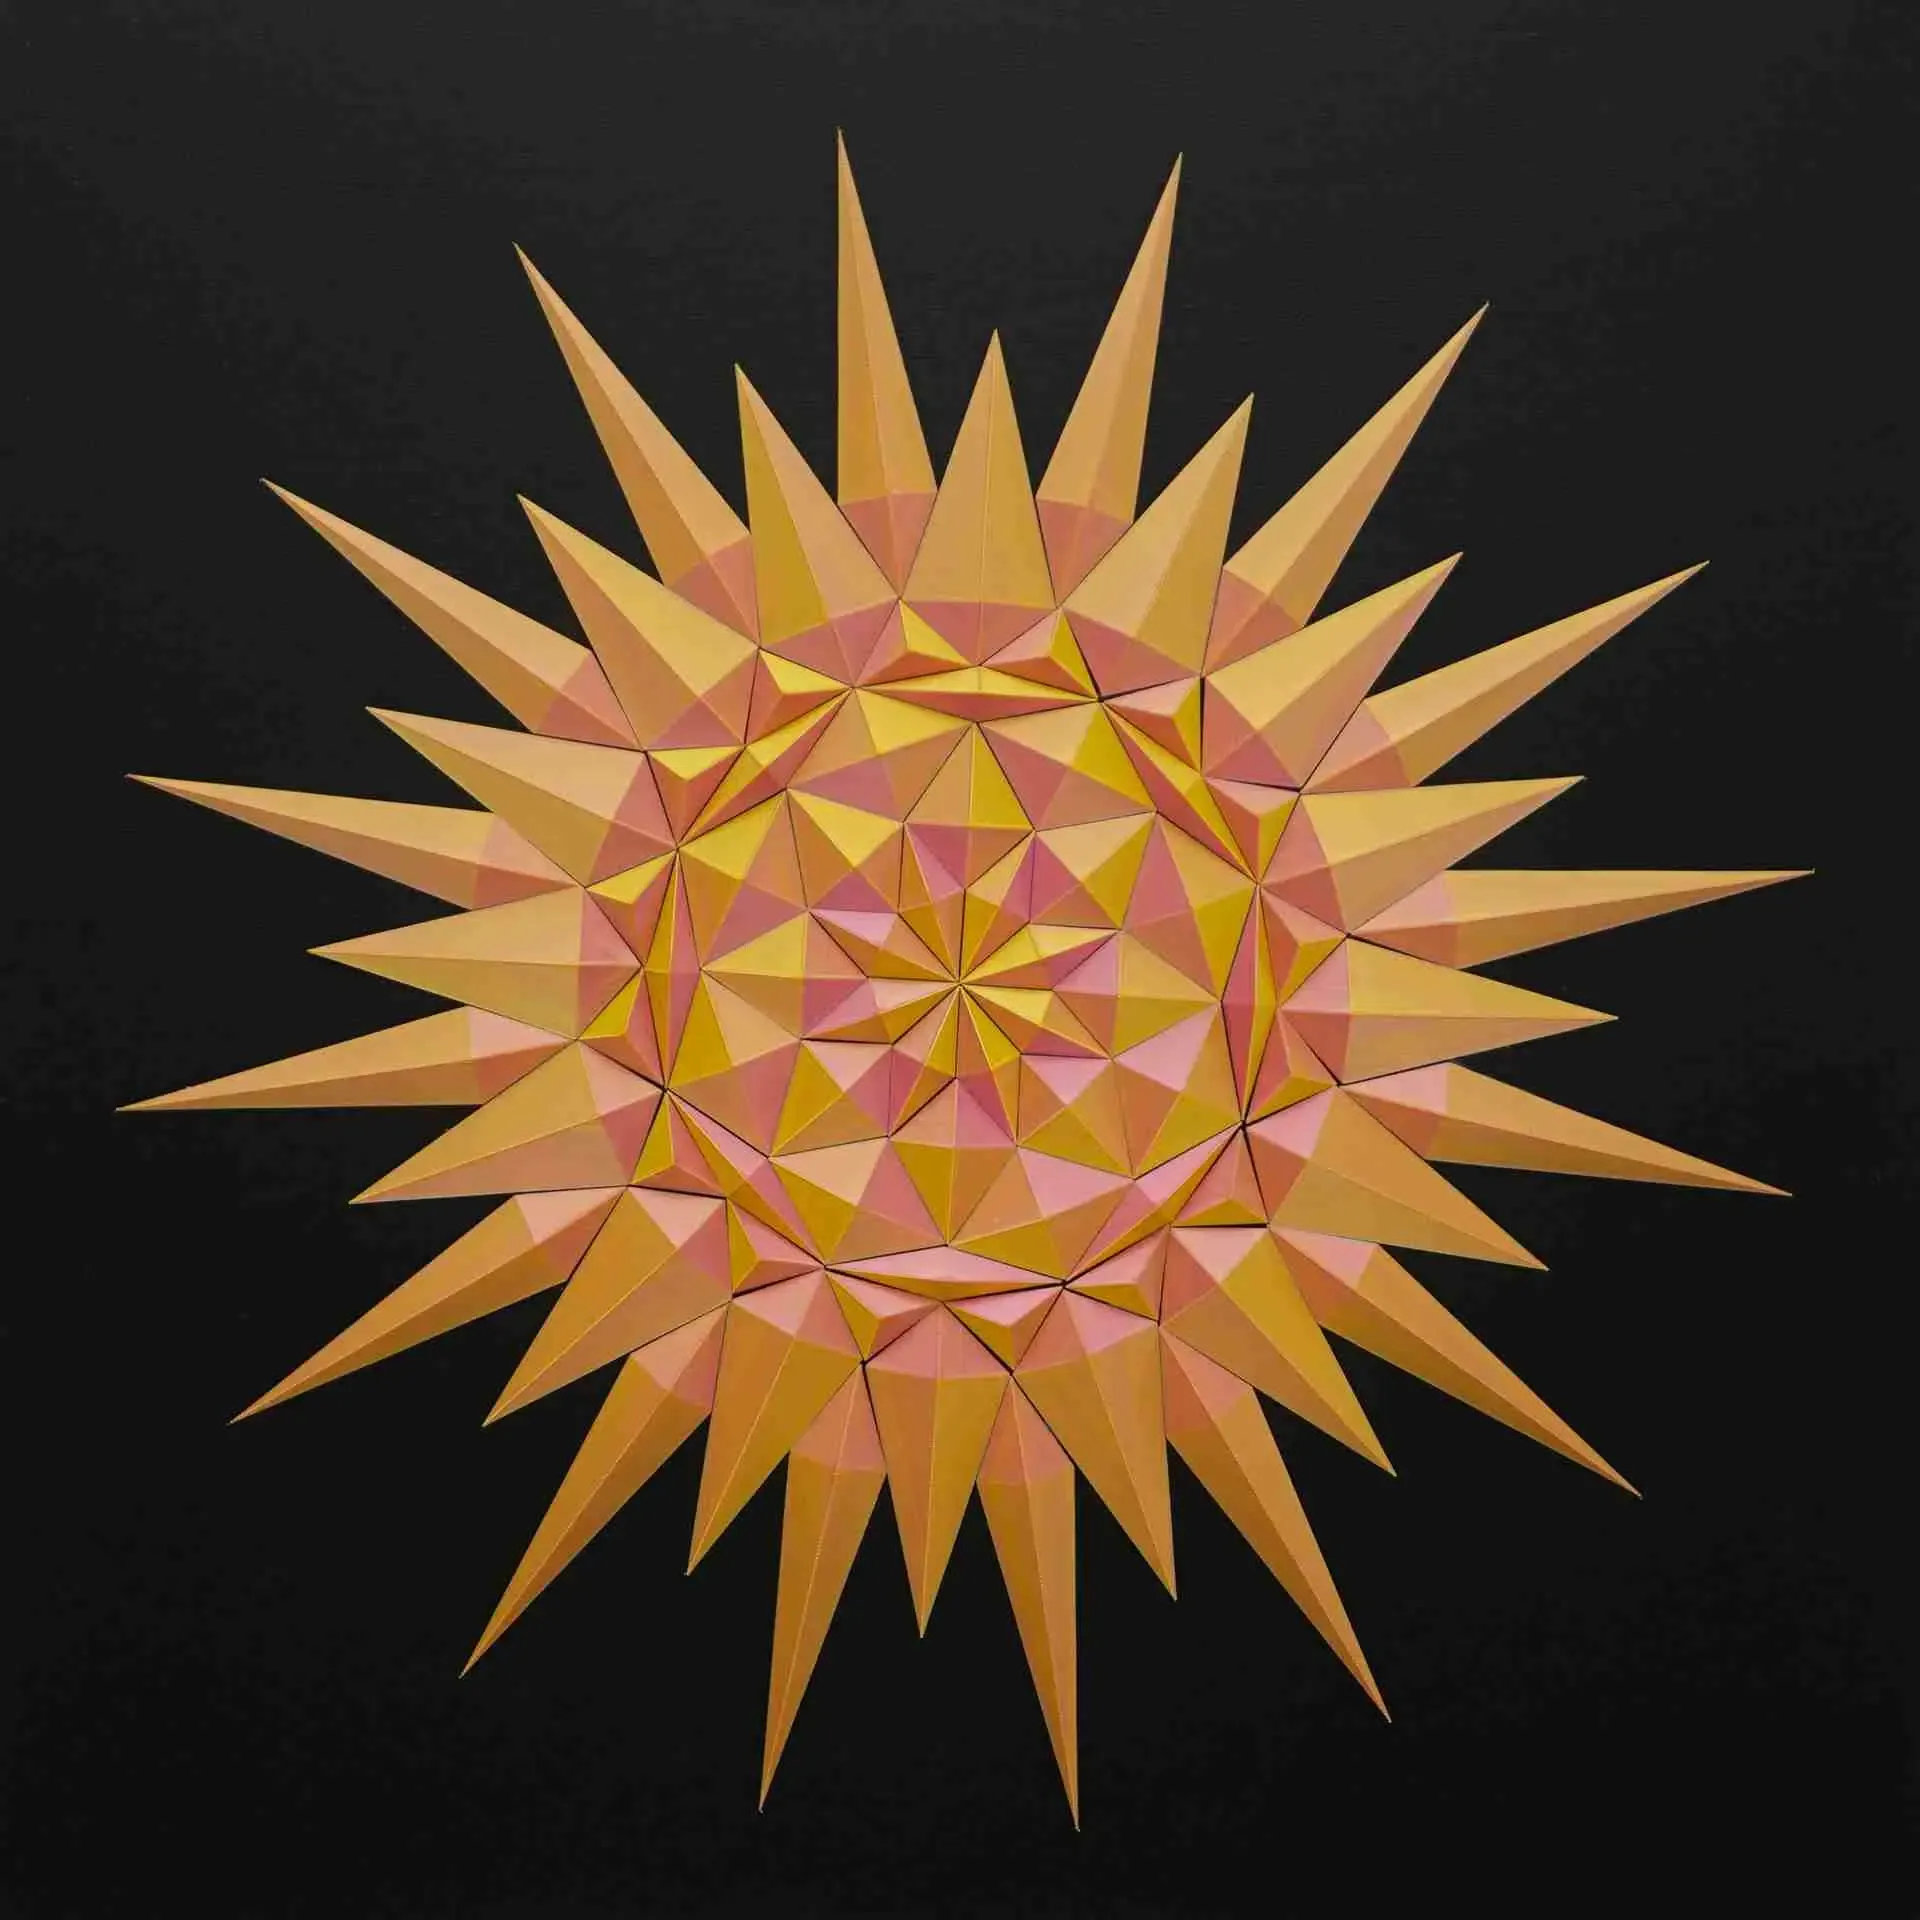 Geometric Star/Sun wall design